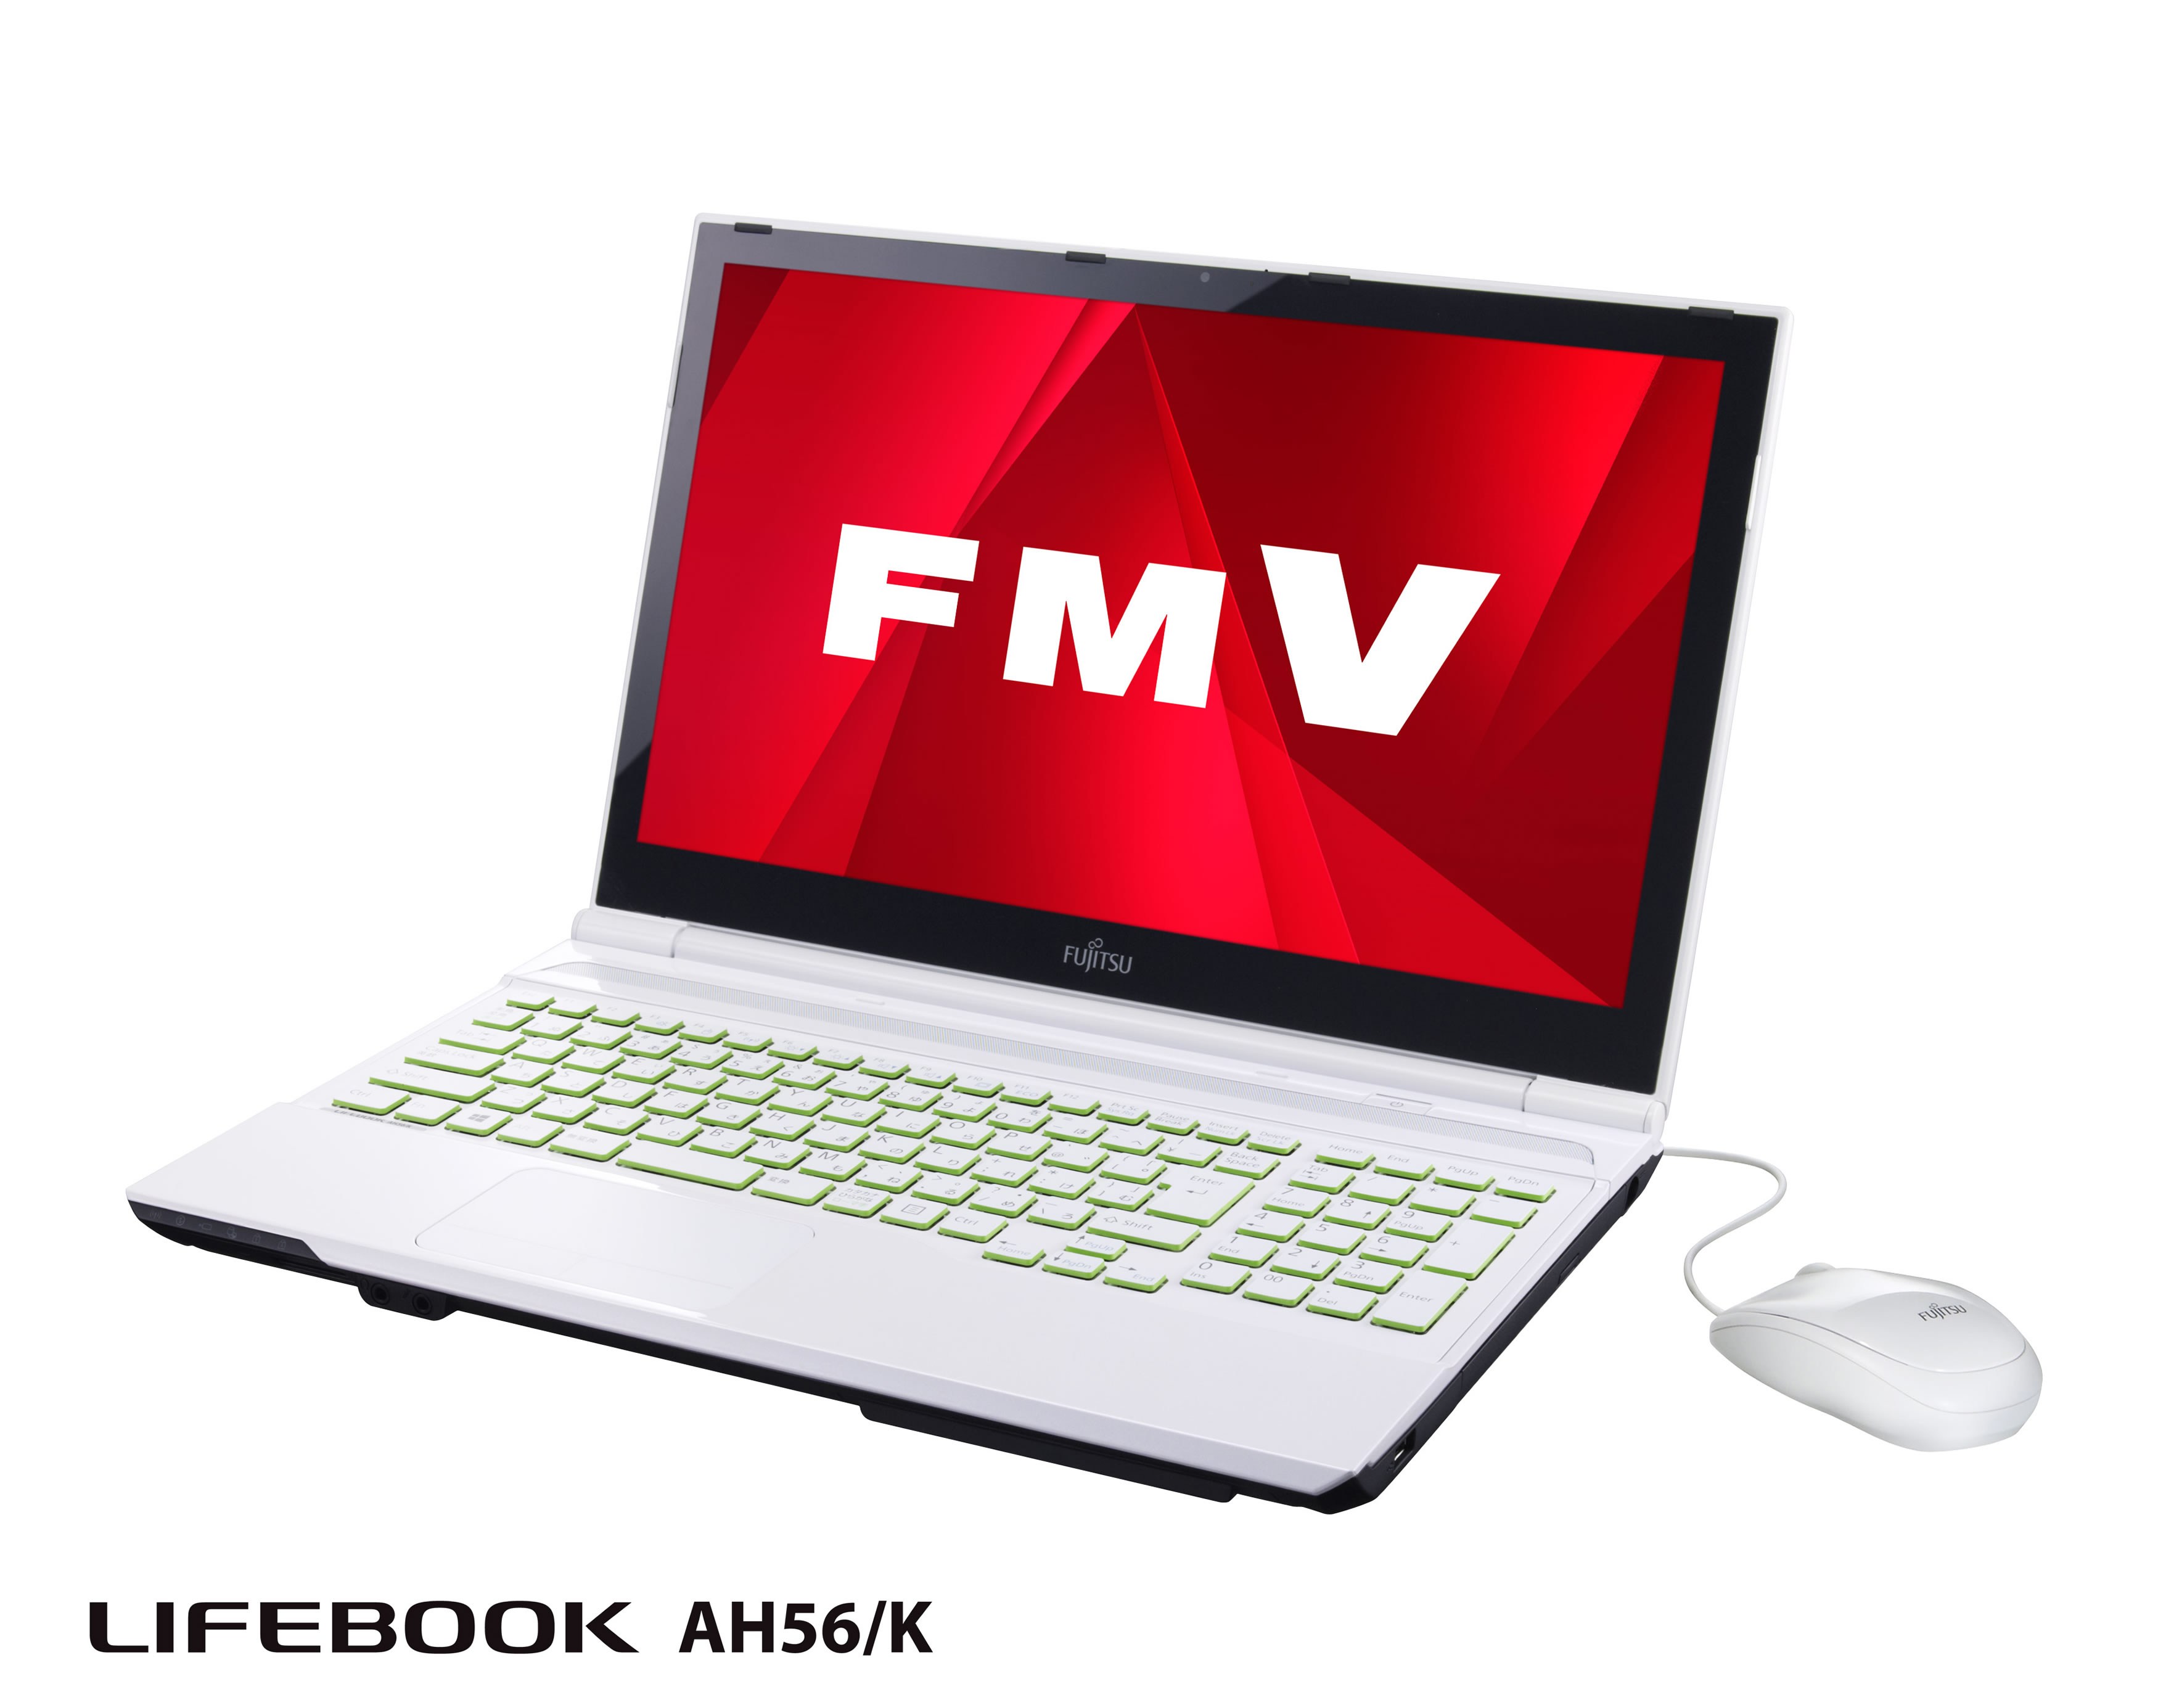 Fujitsu Launches New Line of FMV Series PCs - Fujitsu Global